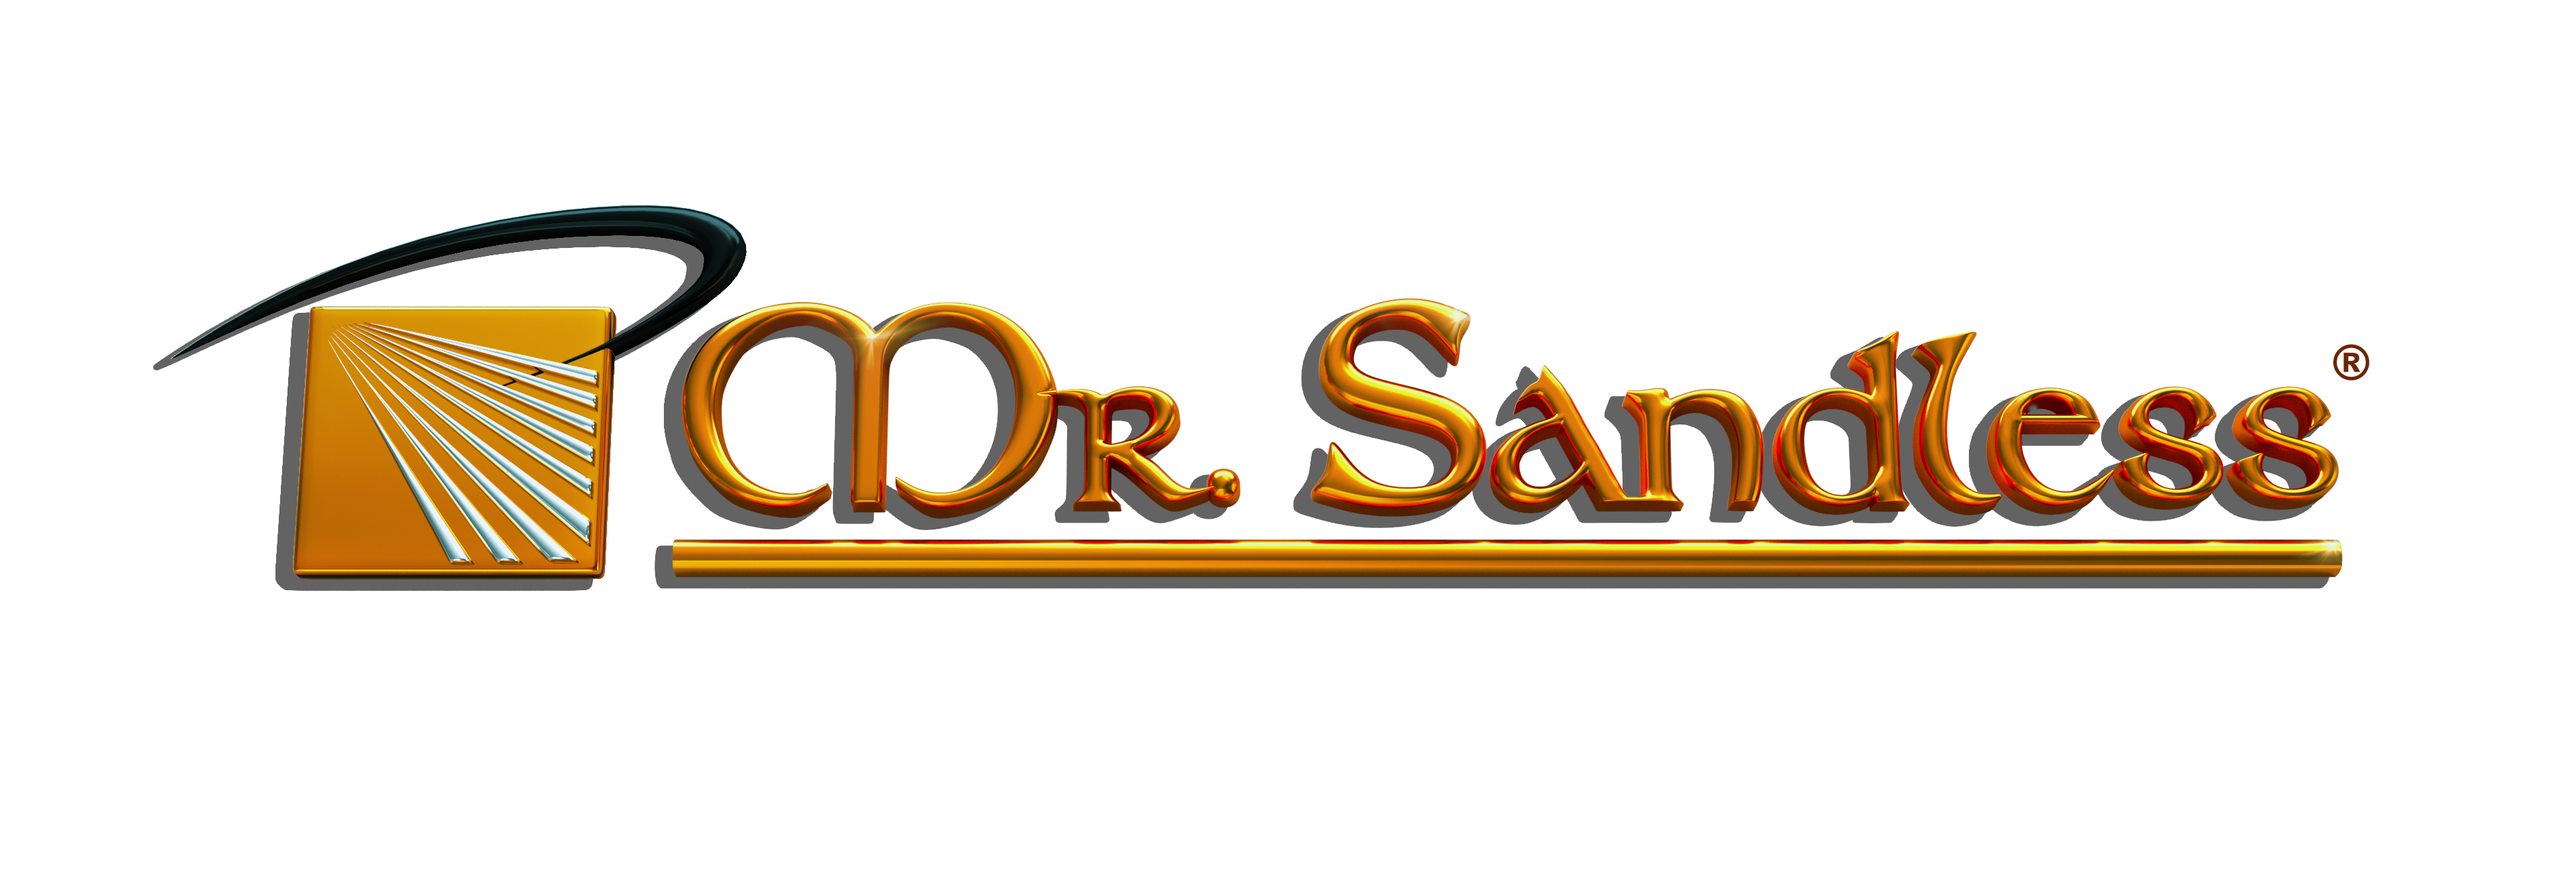 Mr. Sandless Portland Logo